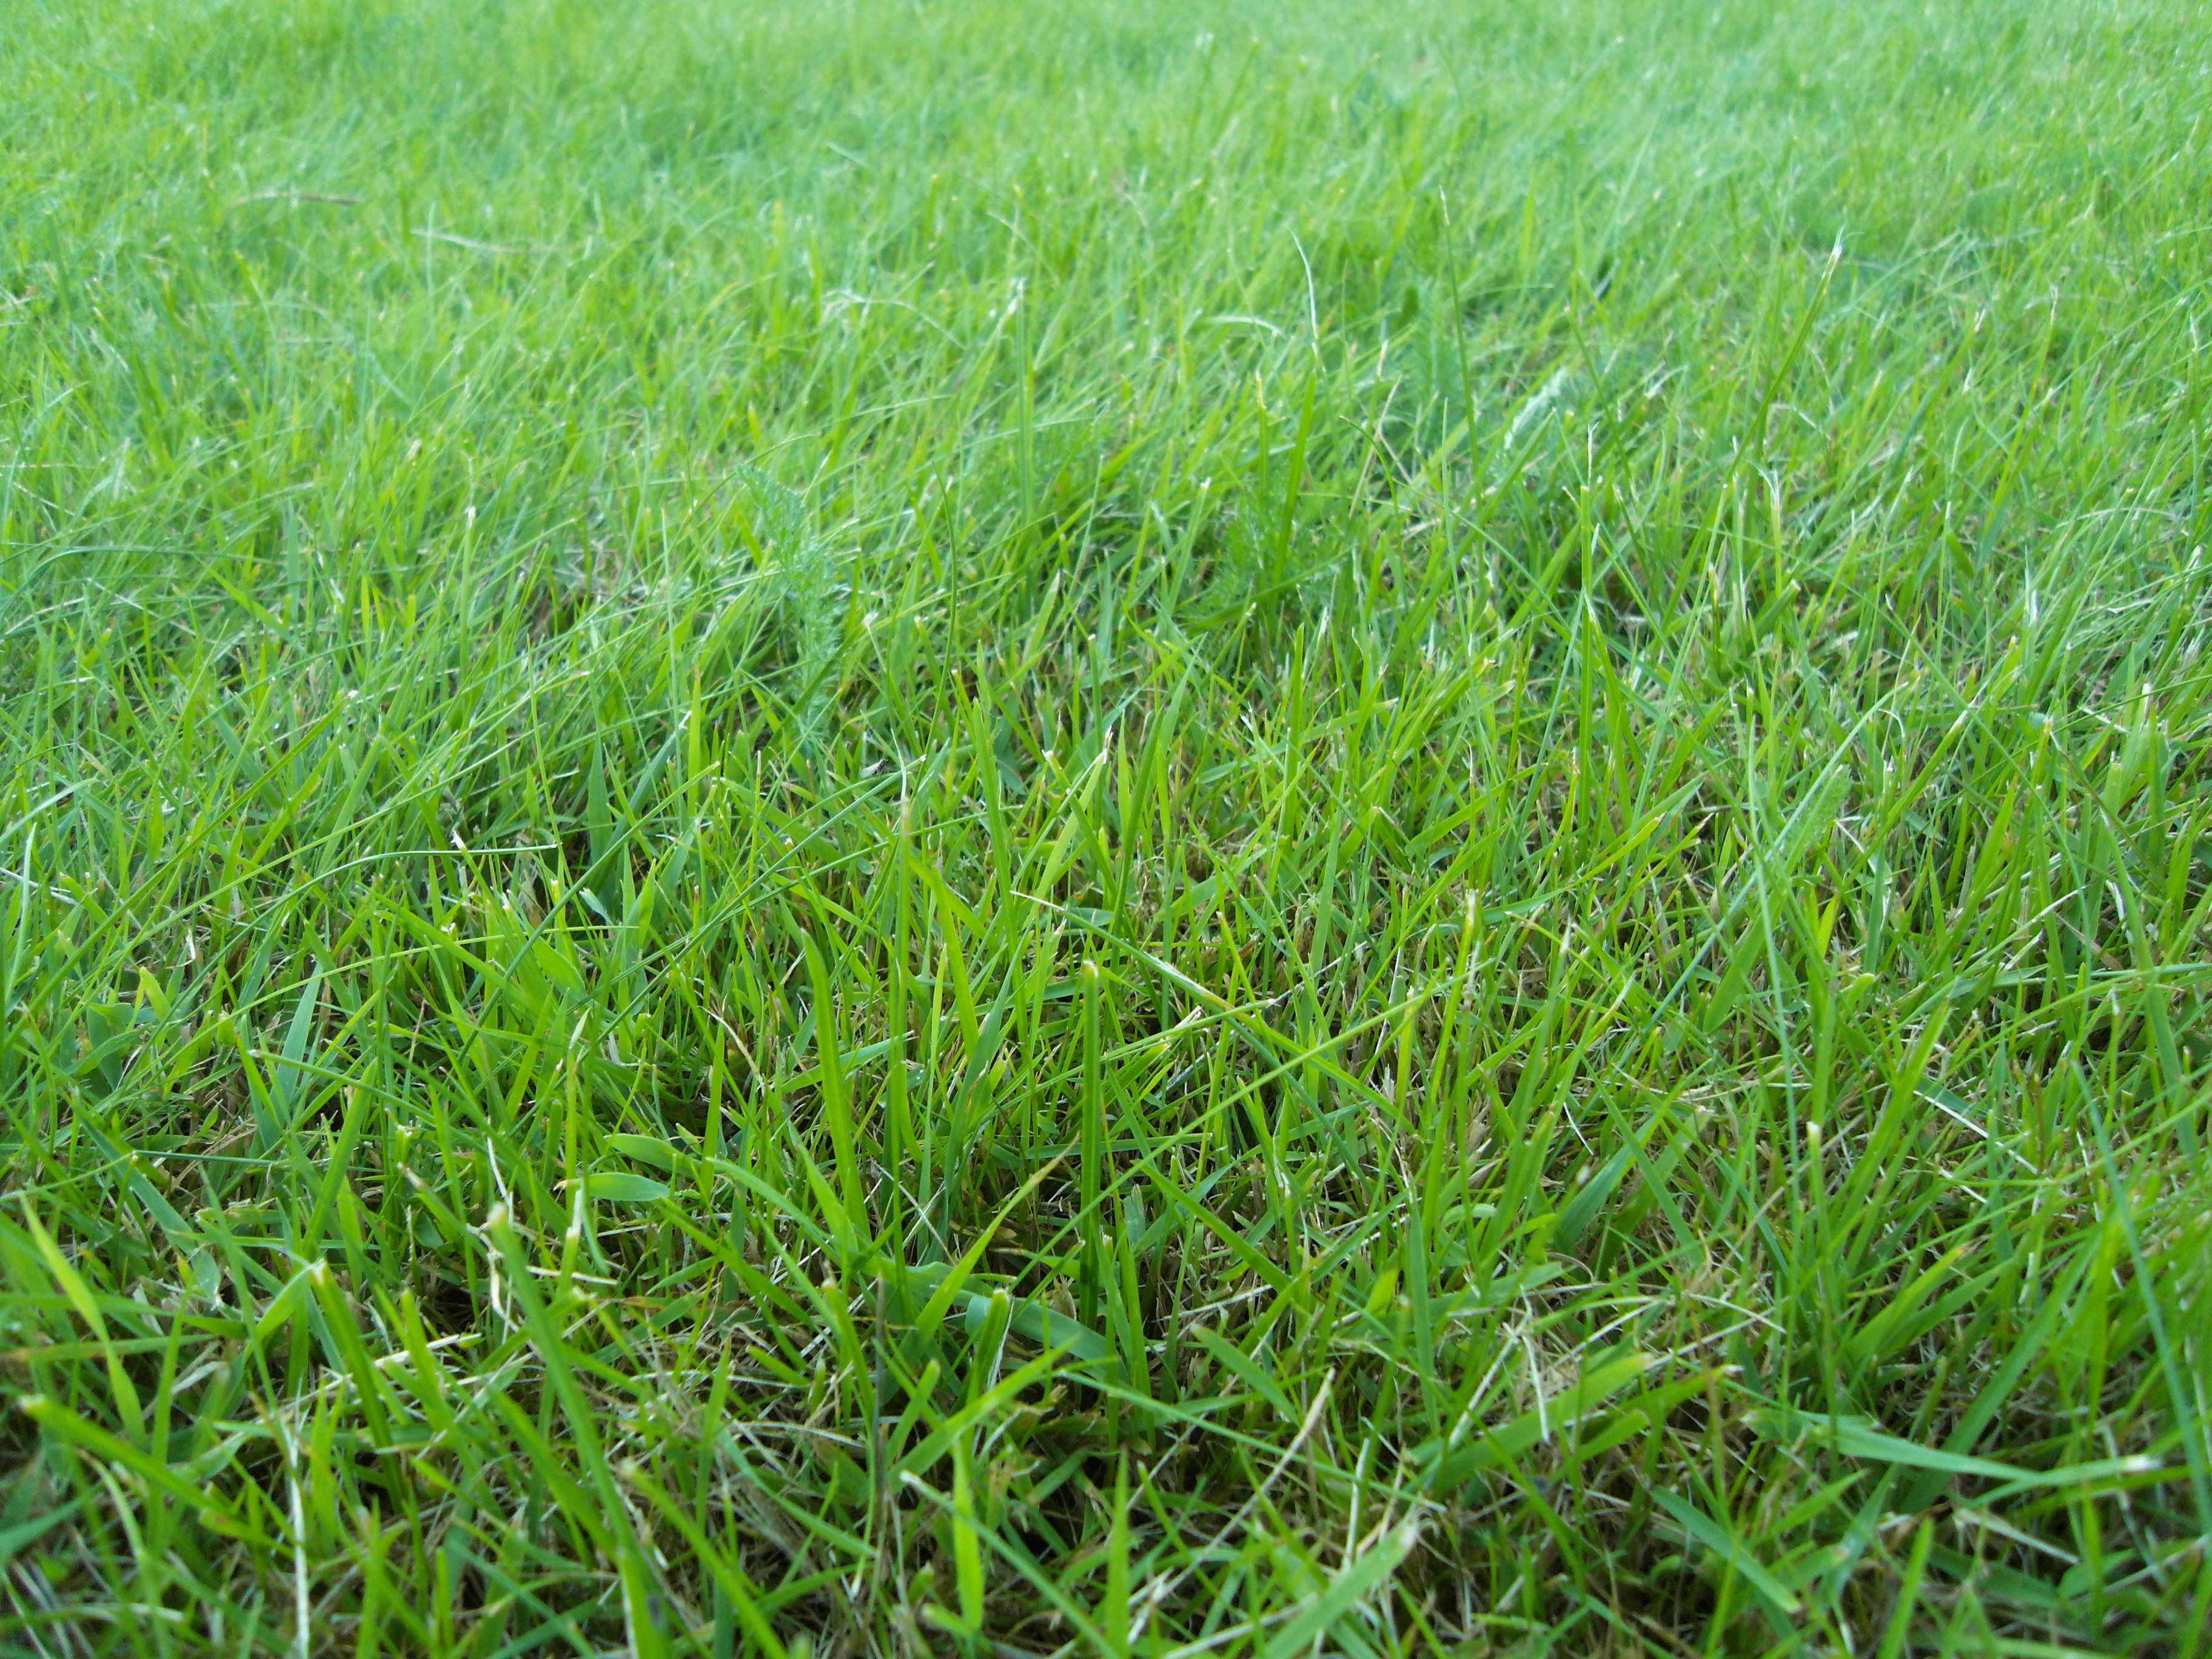 File:Grass, summer 2012.JPG - Wikimedia Commons